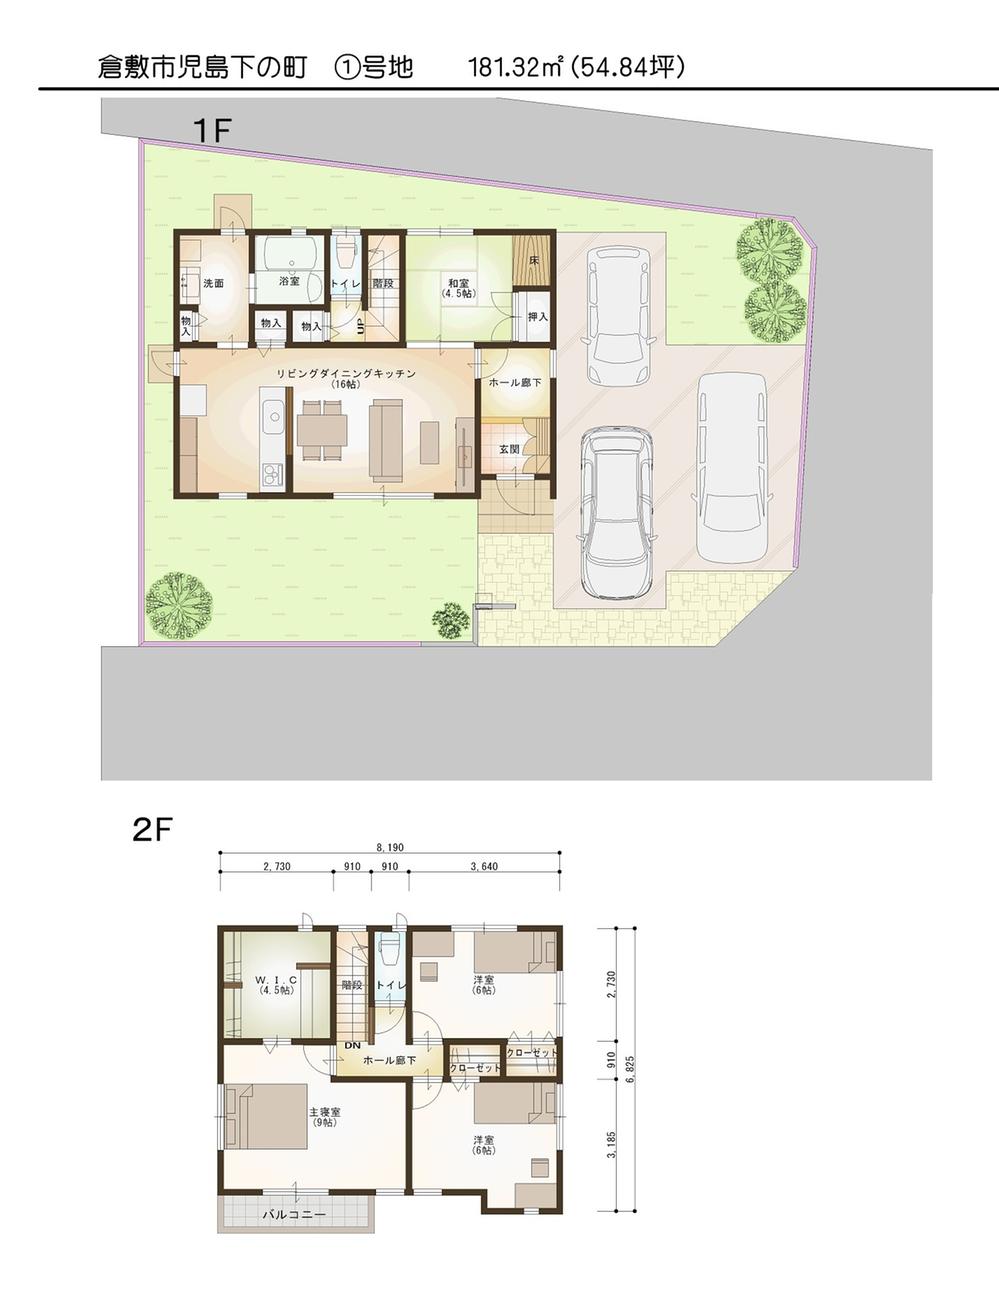 Building plan example (Perth ・ Introspection). (5) No. land plan example